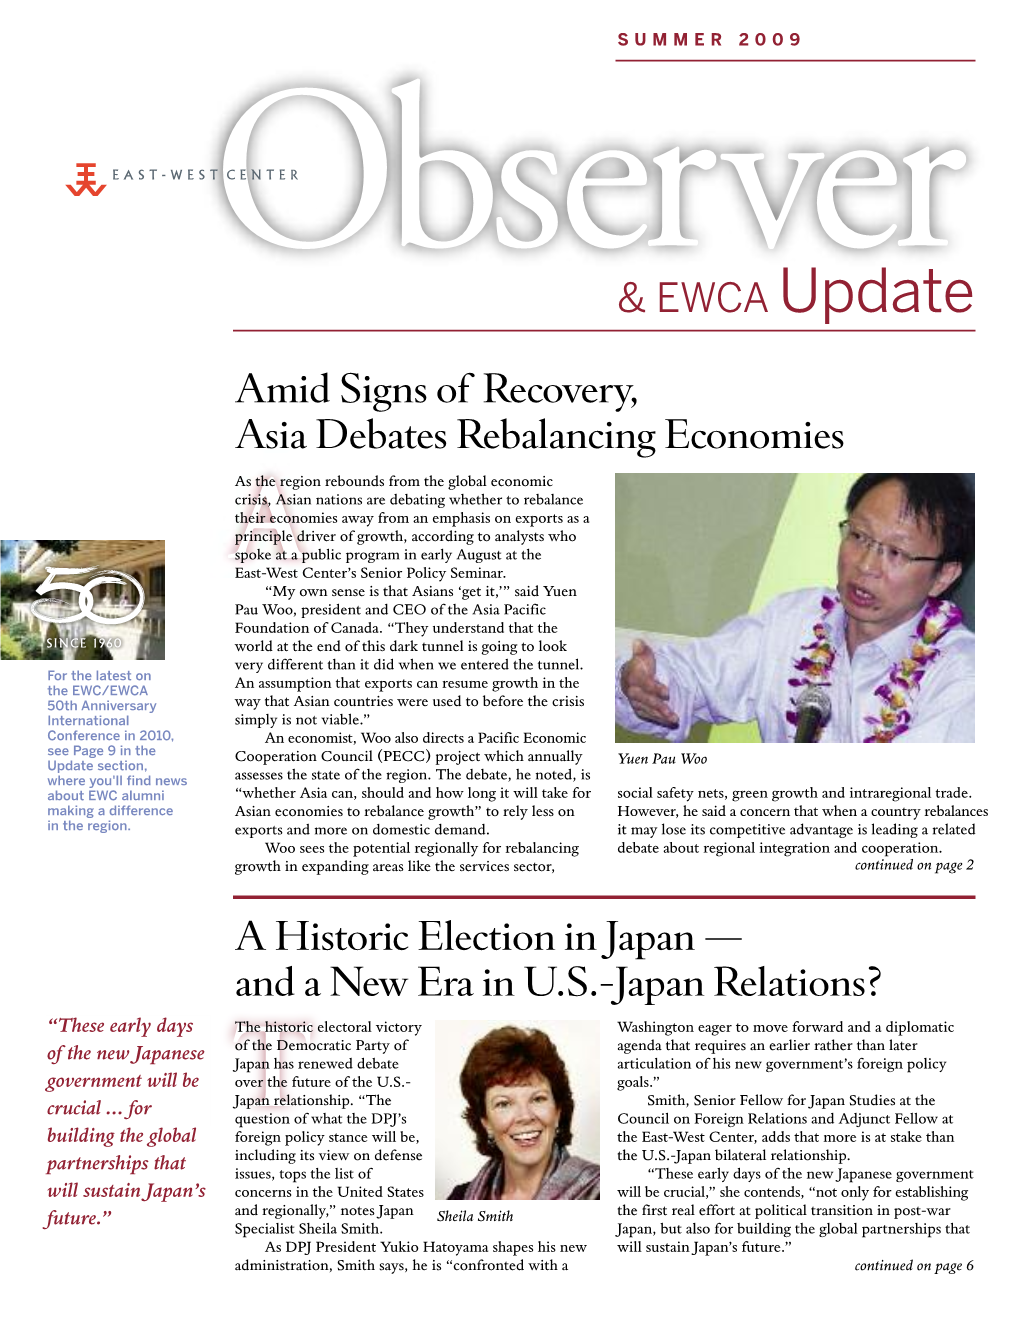 East-West Center Observer, Volume 13, No. 3 / EWCA Update